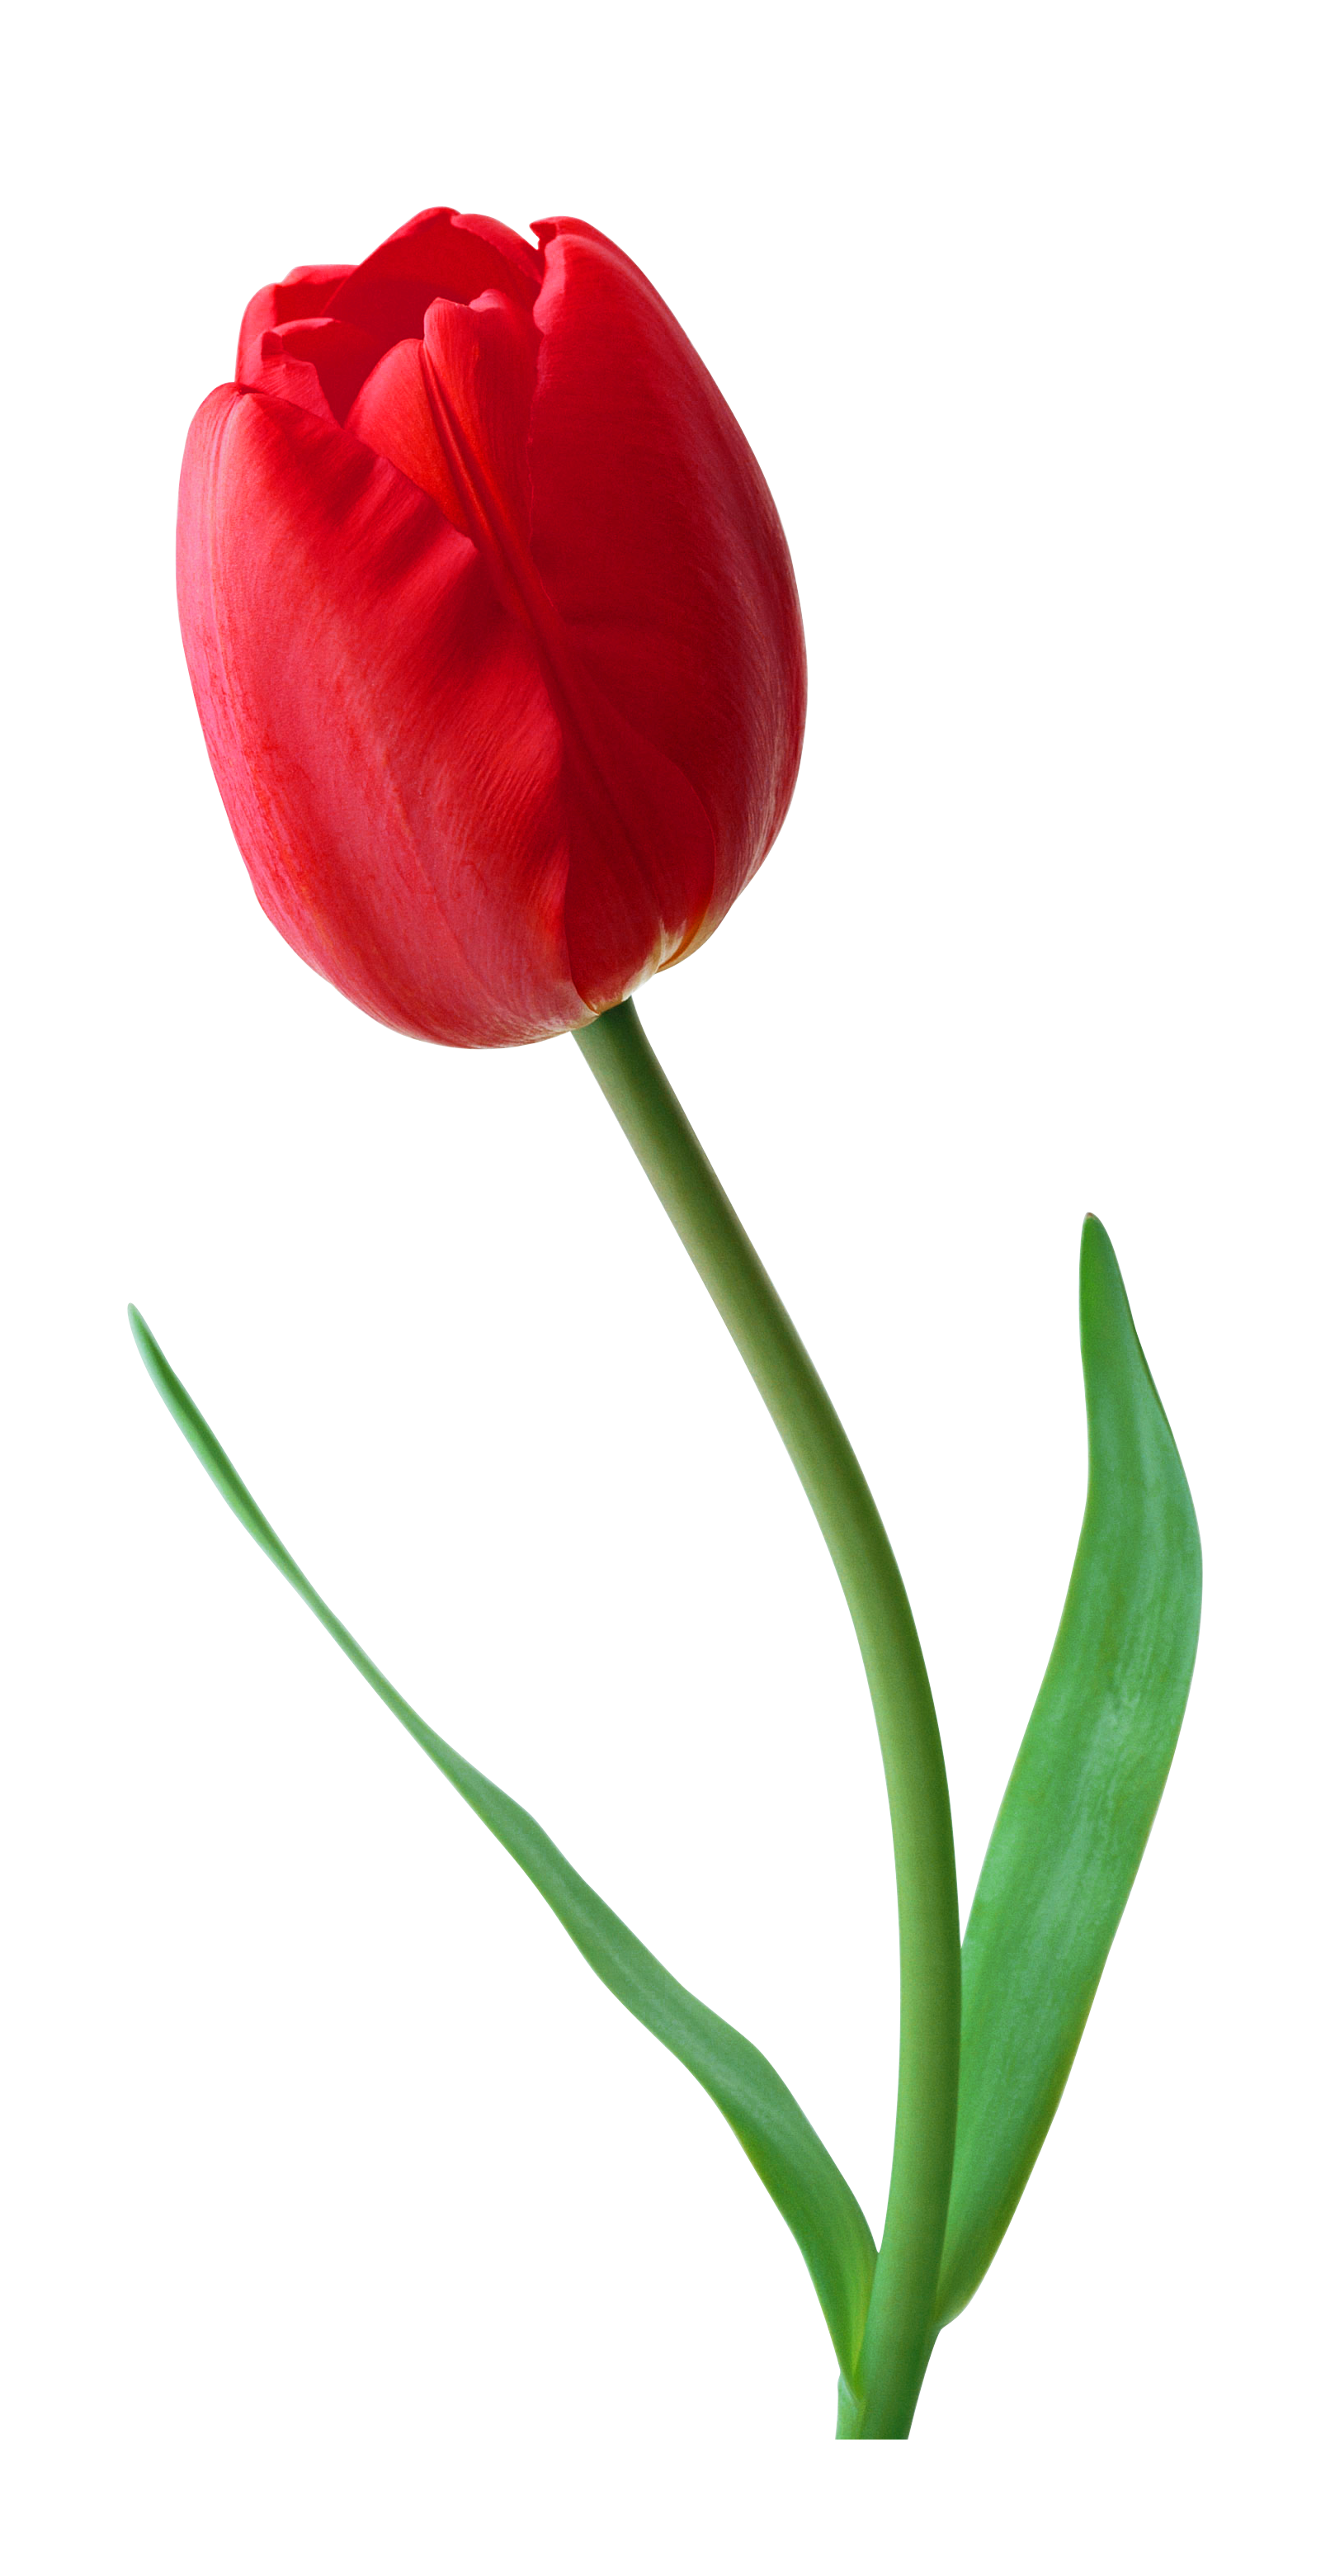 Tulip Flower PNG Image in High Definition pngteam.com